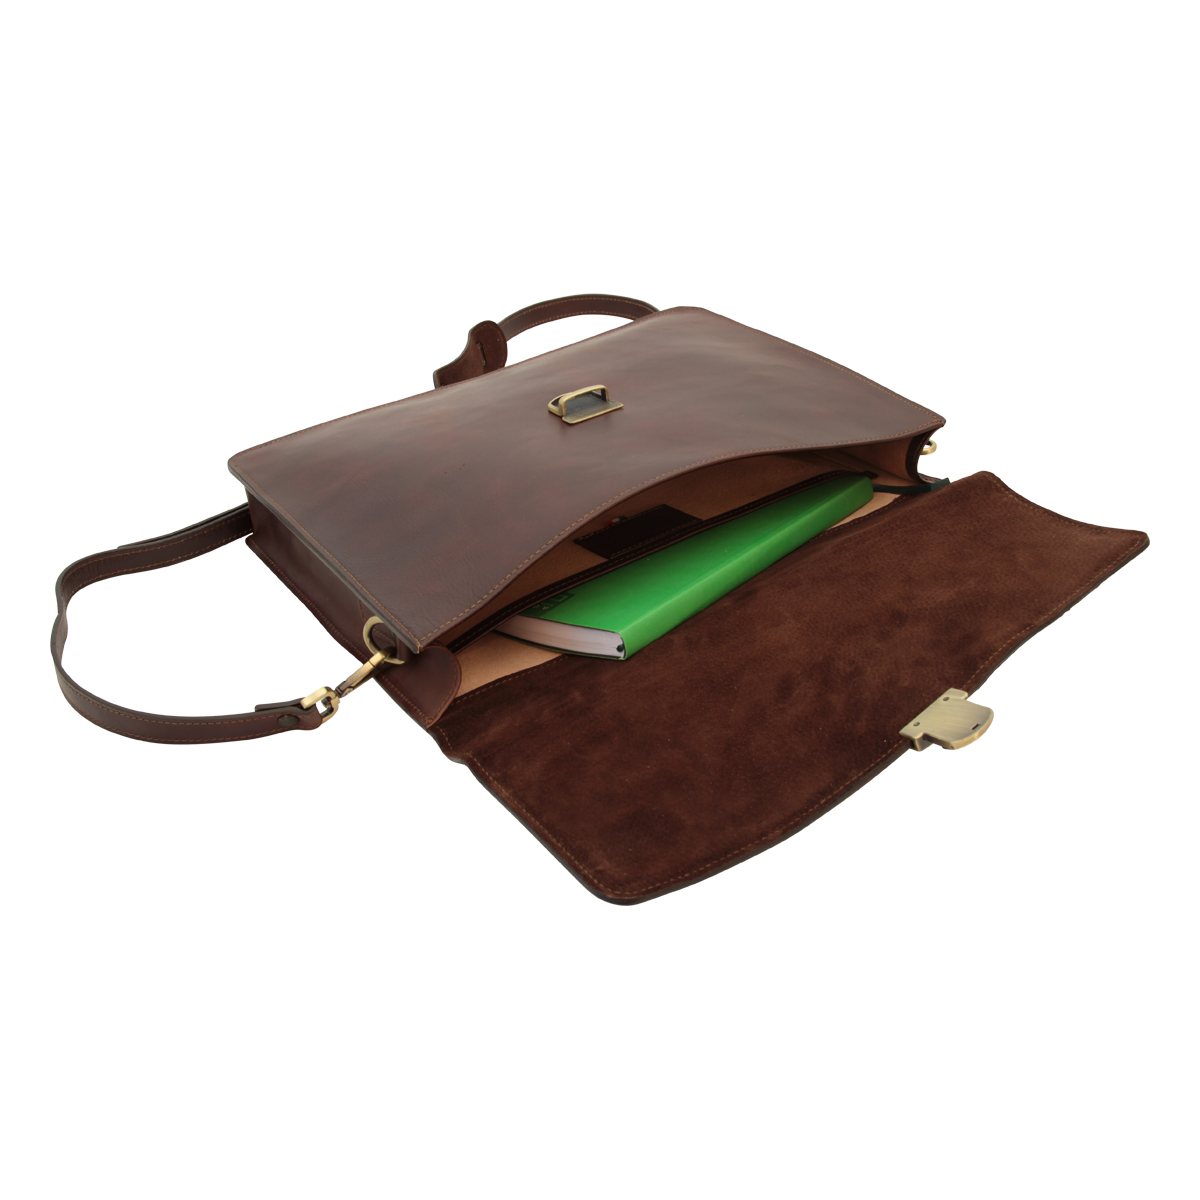 Business leather briefcase dark brown | 407589TM US | Old Angler Firenze